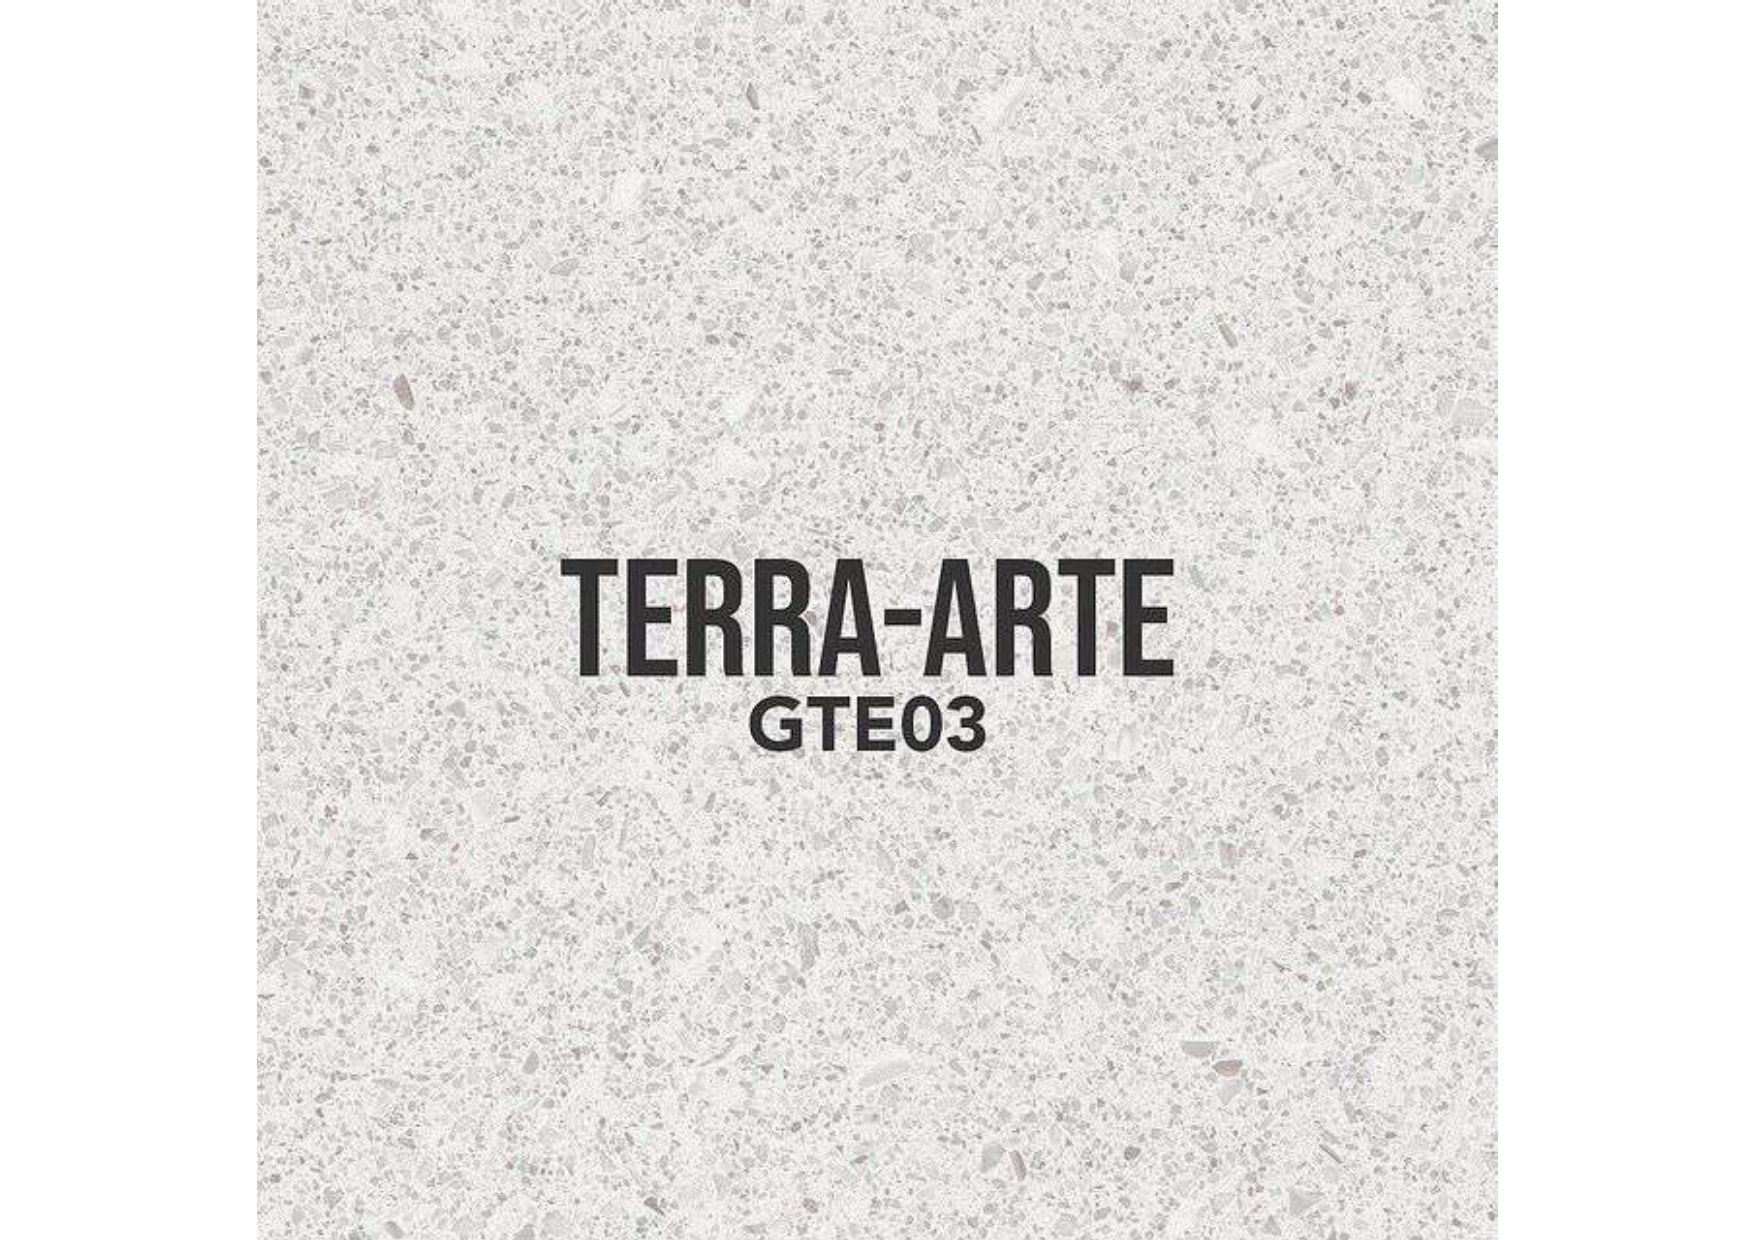 Terra-Arte GTE03